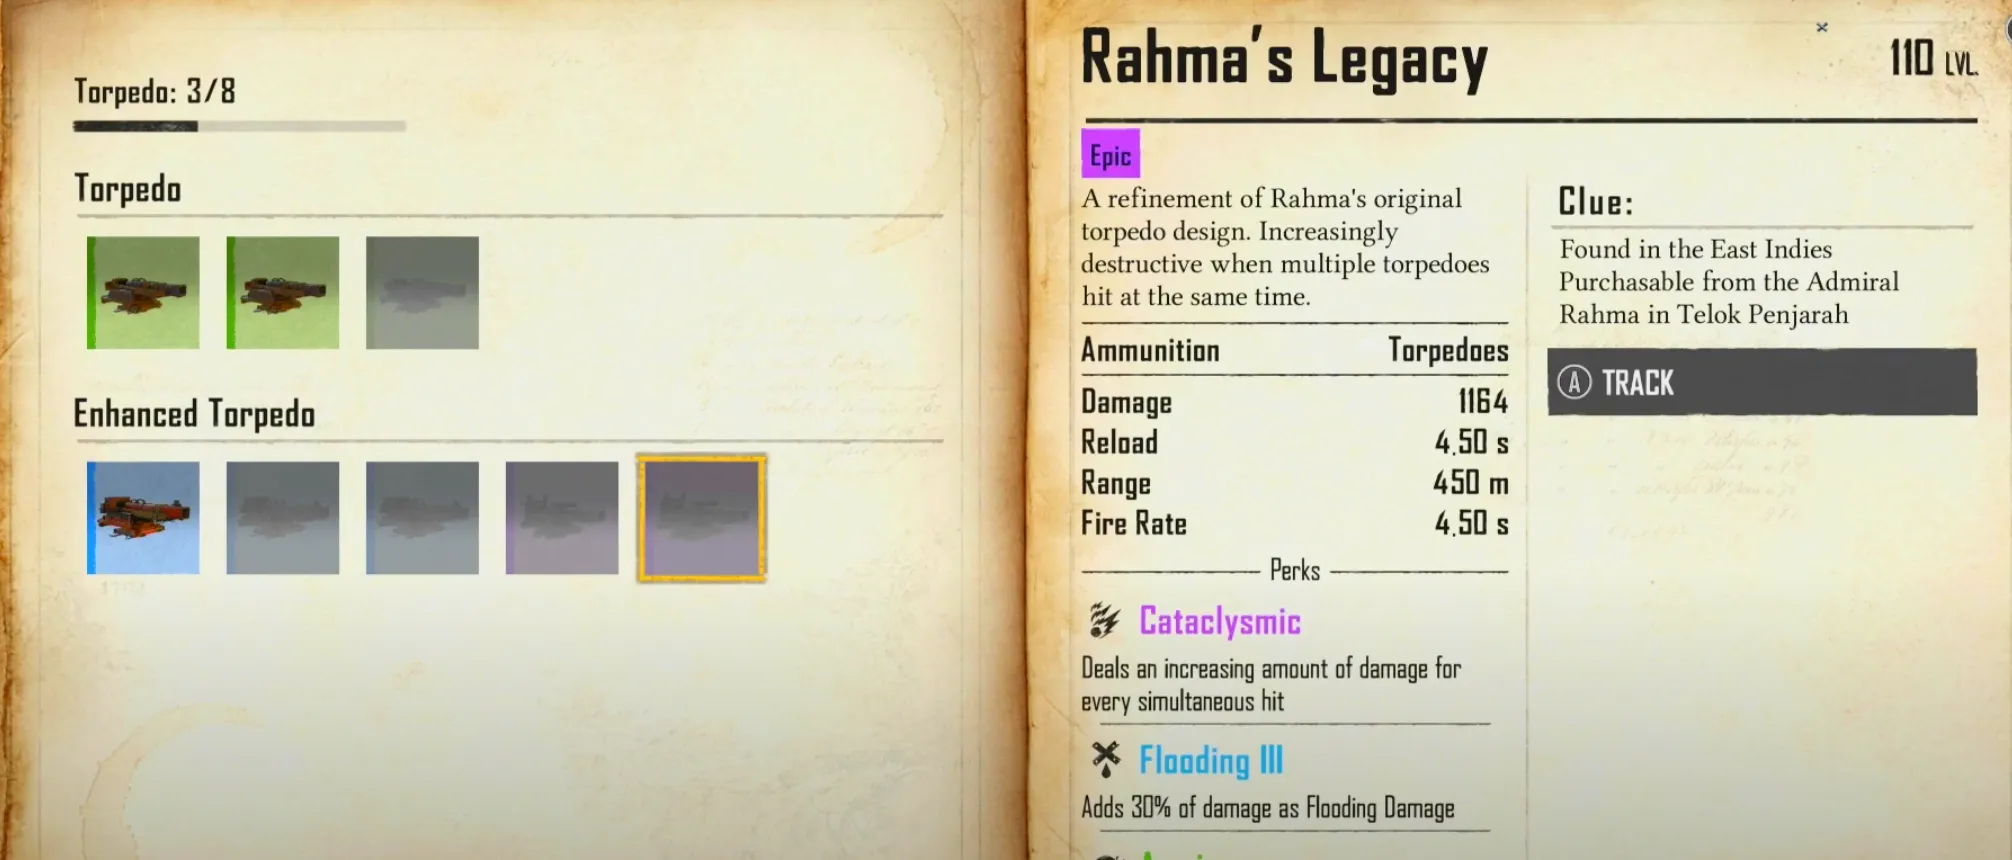 Rahma's Legacy